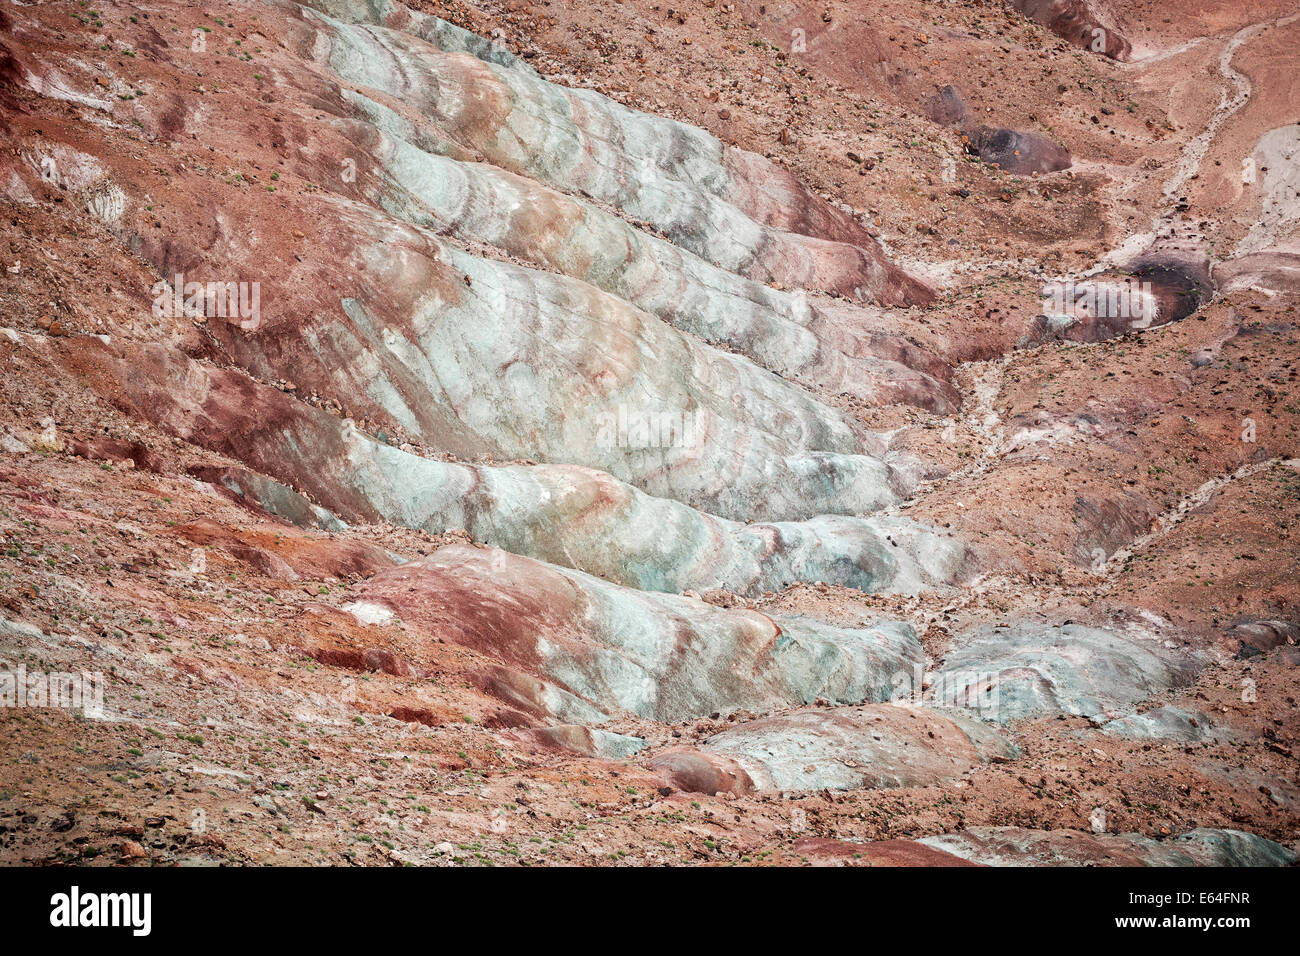 Vista aerea di una vena minerale ricca di ossido di ferro in un'area desertica vicino a Moab, Utah, USA. Foto Stock